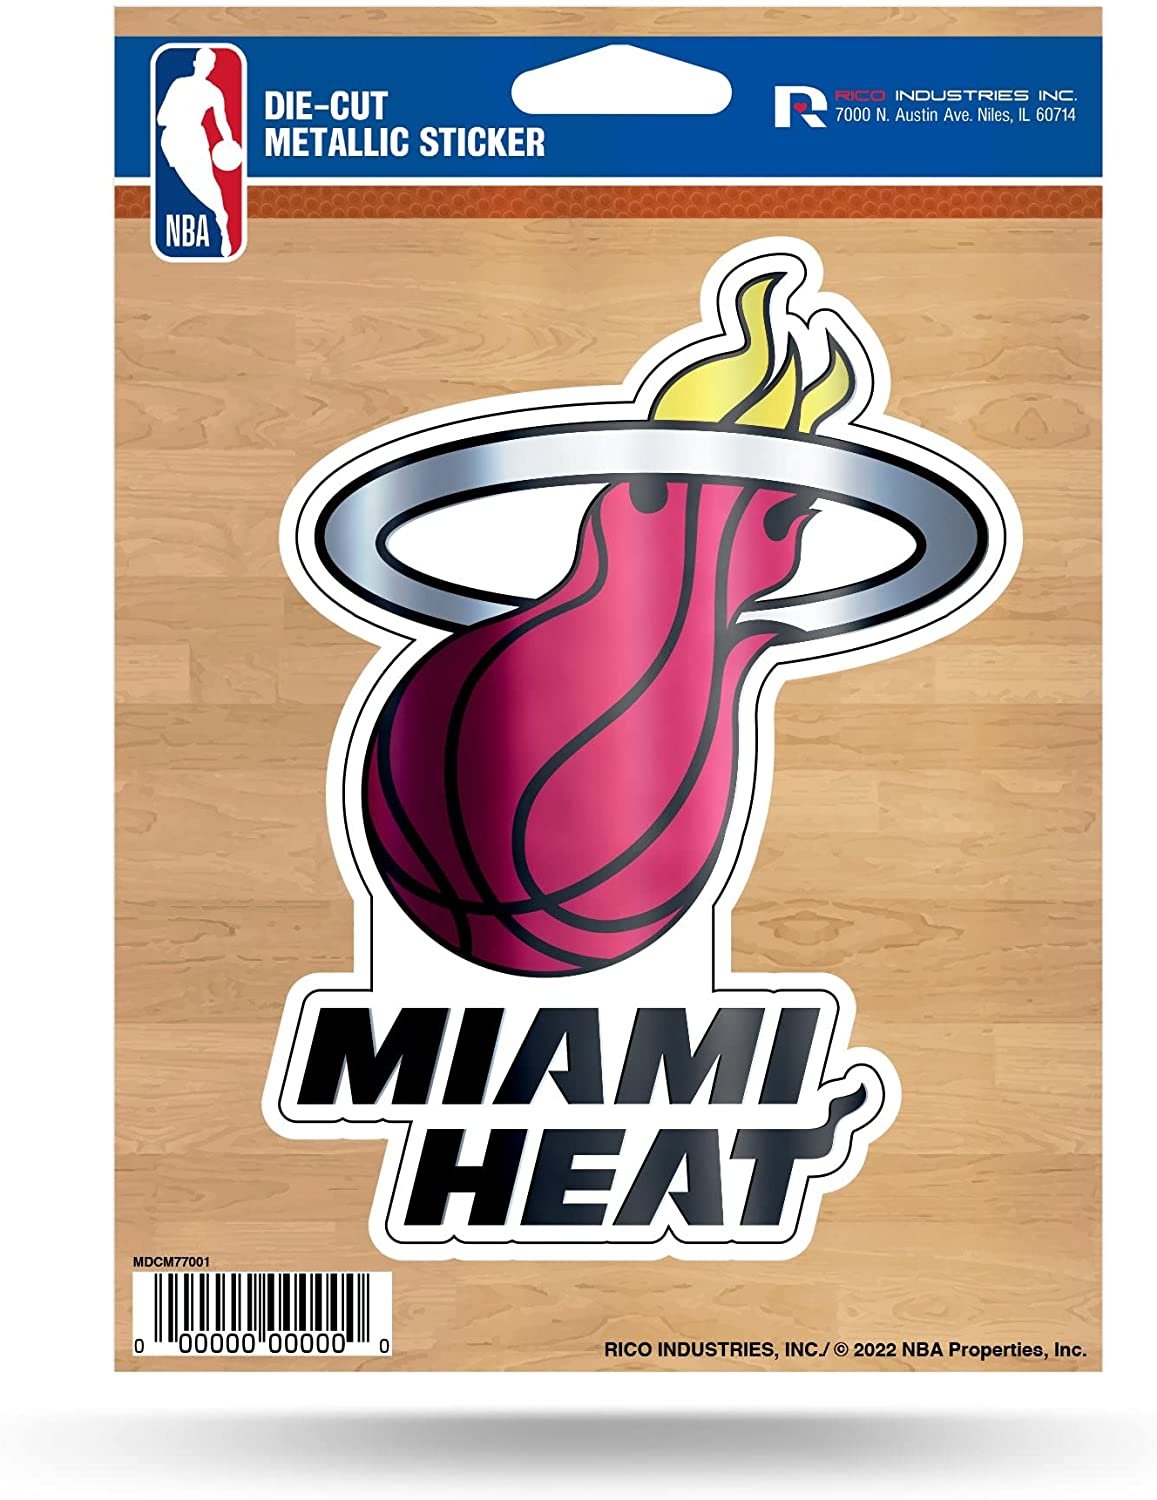 Miami Heat 5 Inch Die Cut Decal Sticker, Metallic Shimmer Design, Full Adhesive Backing